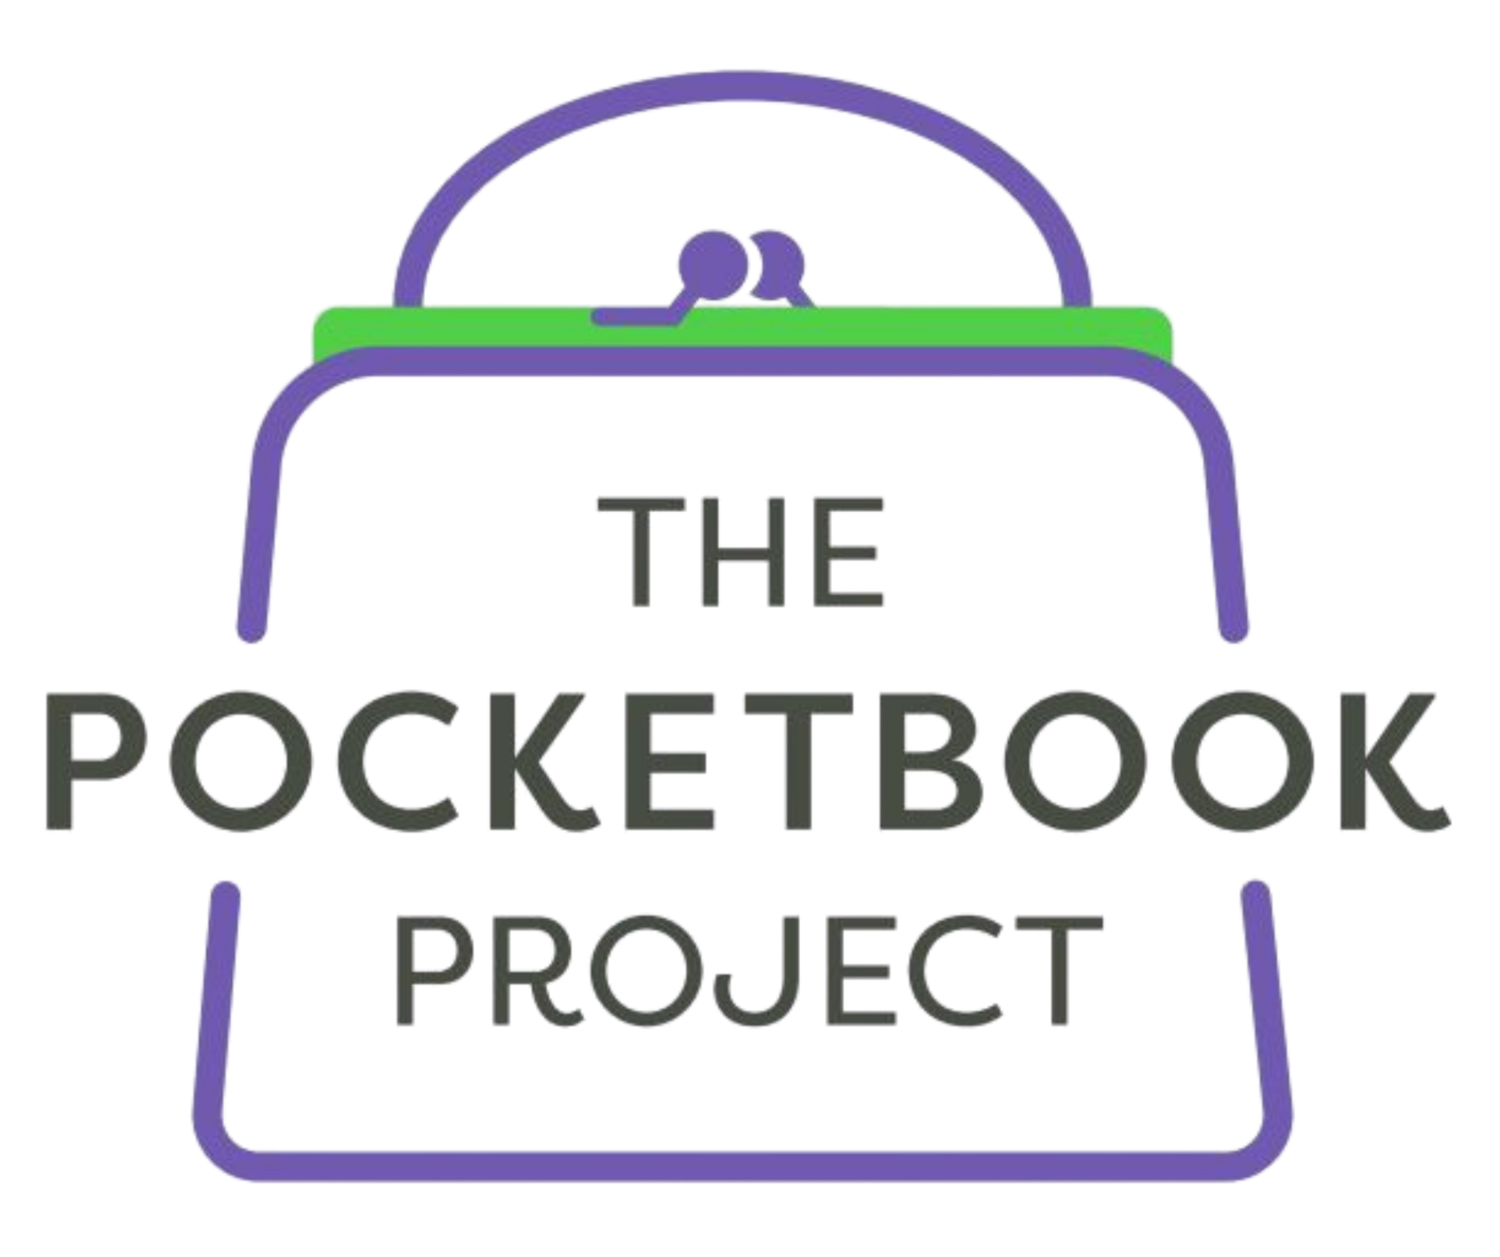 Pocketbook Project